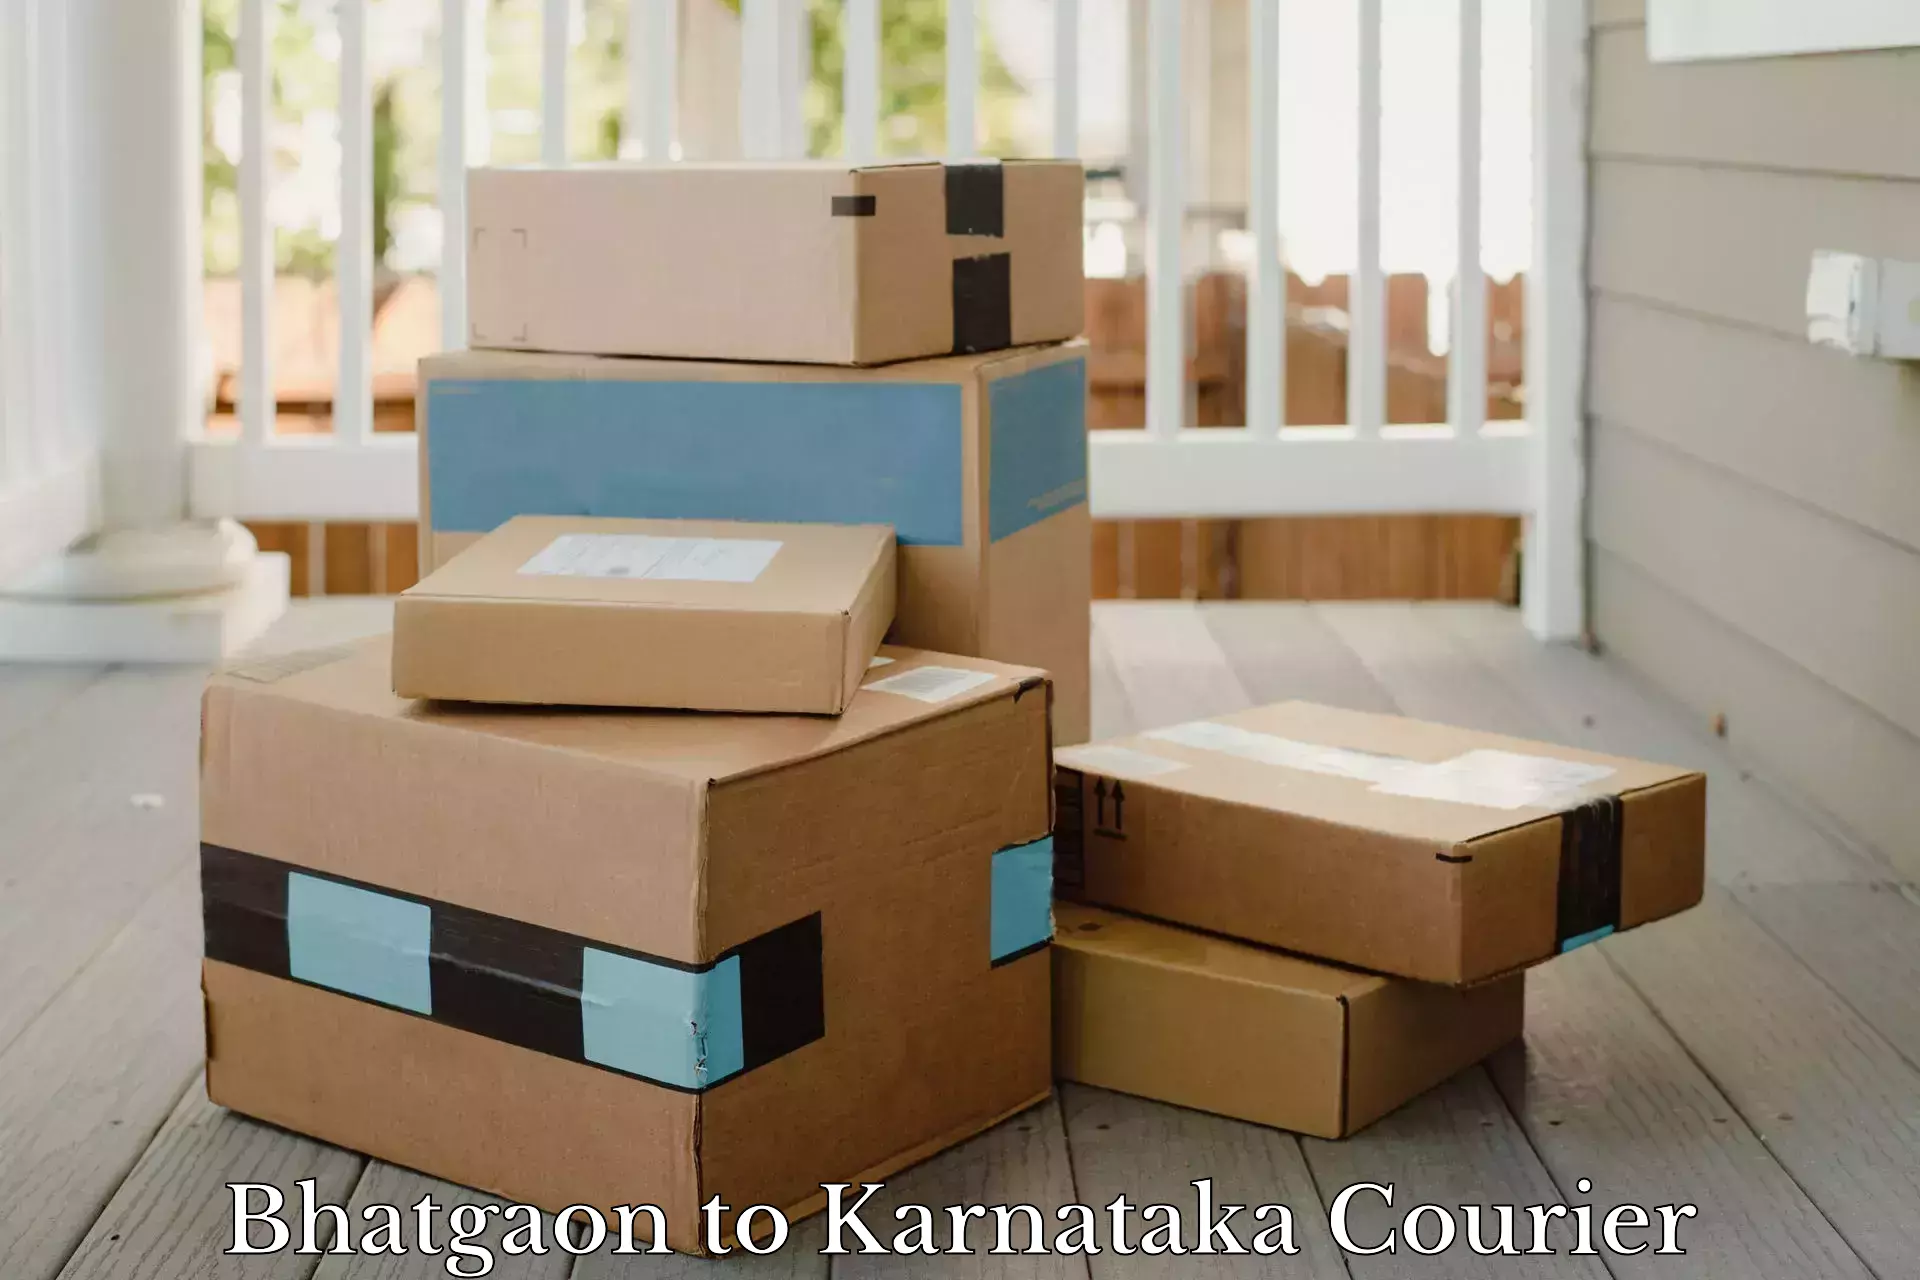 Reliable courier service Bhatgaon to Karnataka